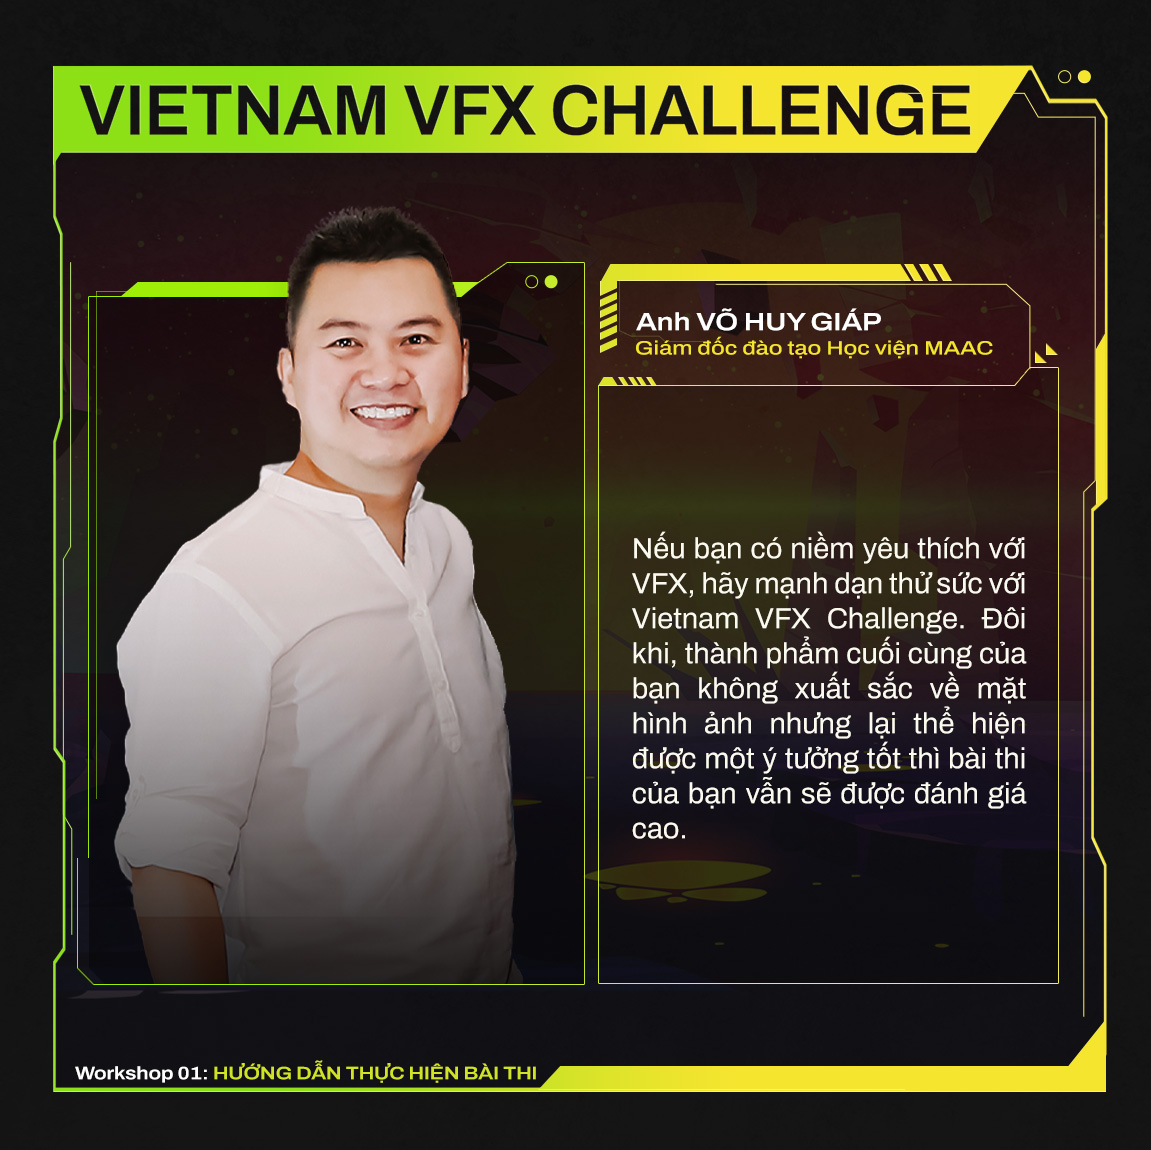 7-lang-nghe-ban-giam-khao-vietnam-vfx-challenge-he-lo-bi-quyet-chinh-phuc-cuoc-thi